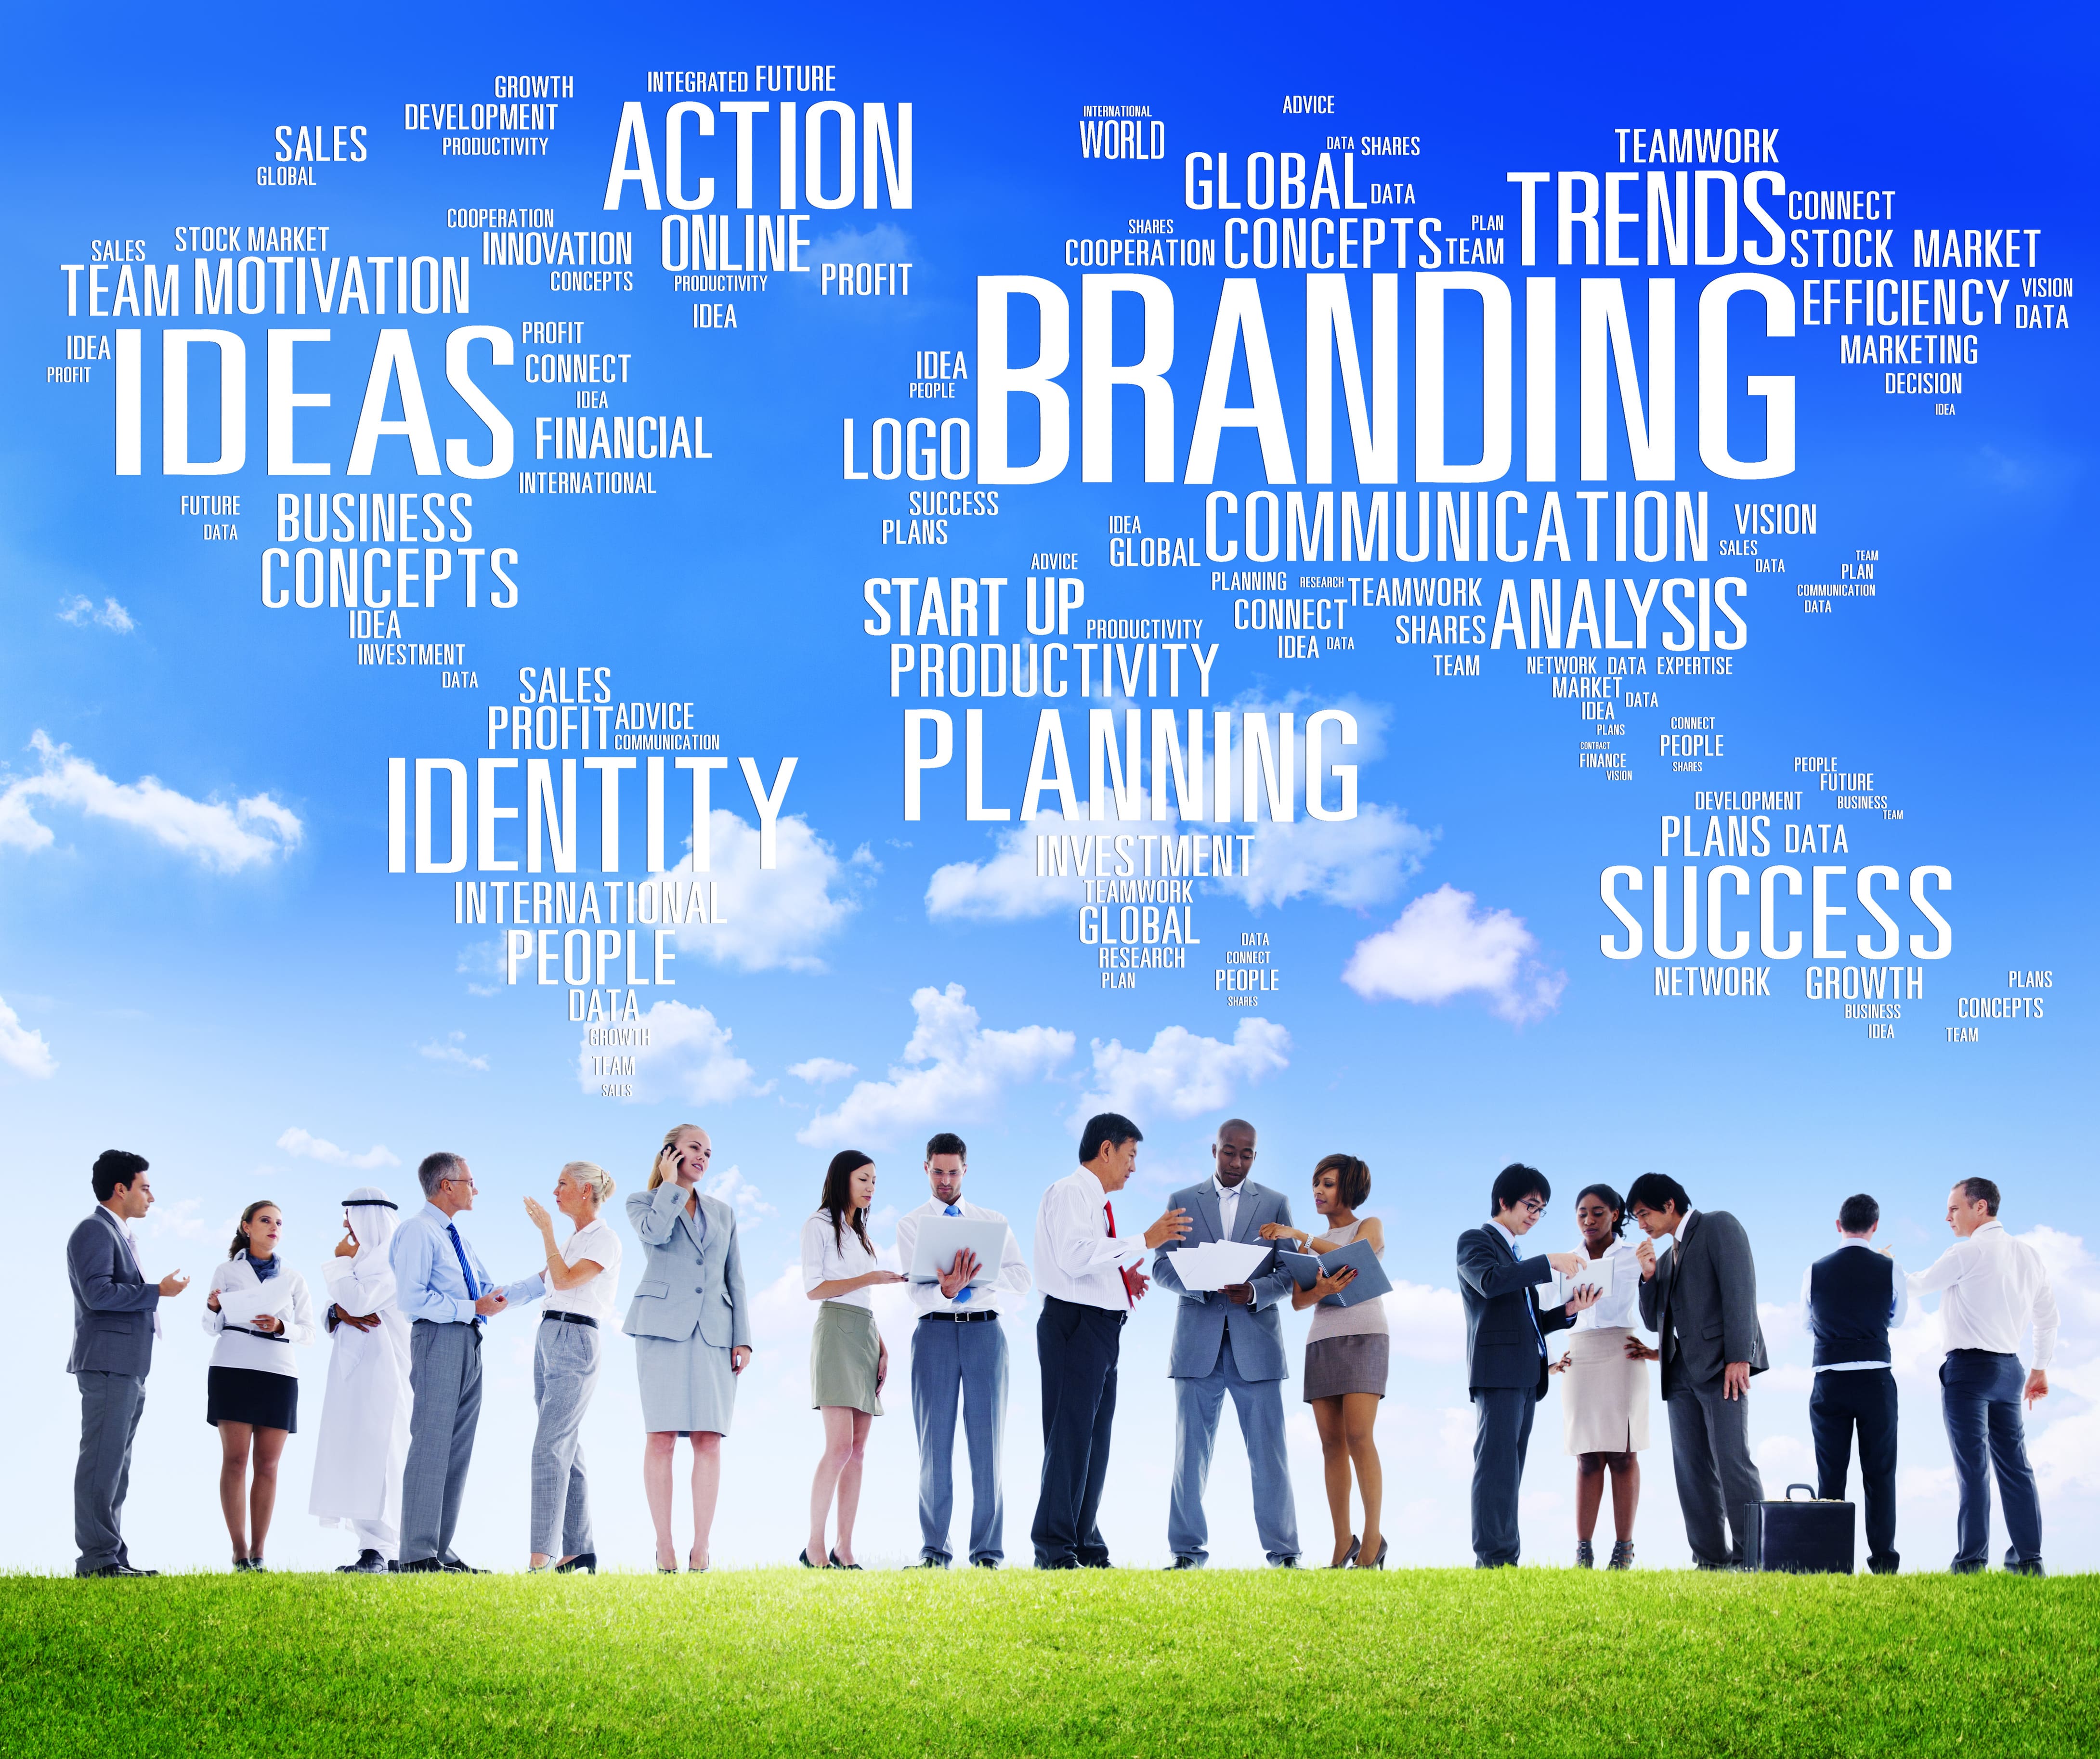 International future. Marketing Team картинка. Developing the Plan фото. Global communication. Global Business solutions.